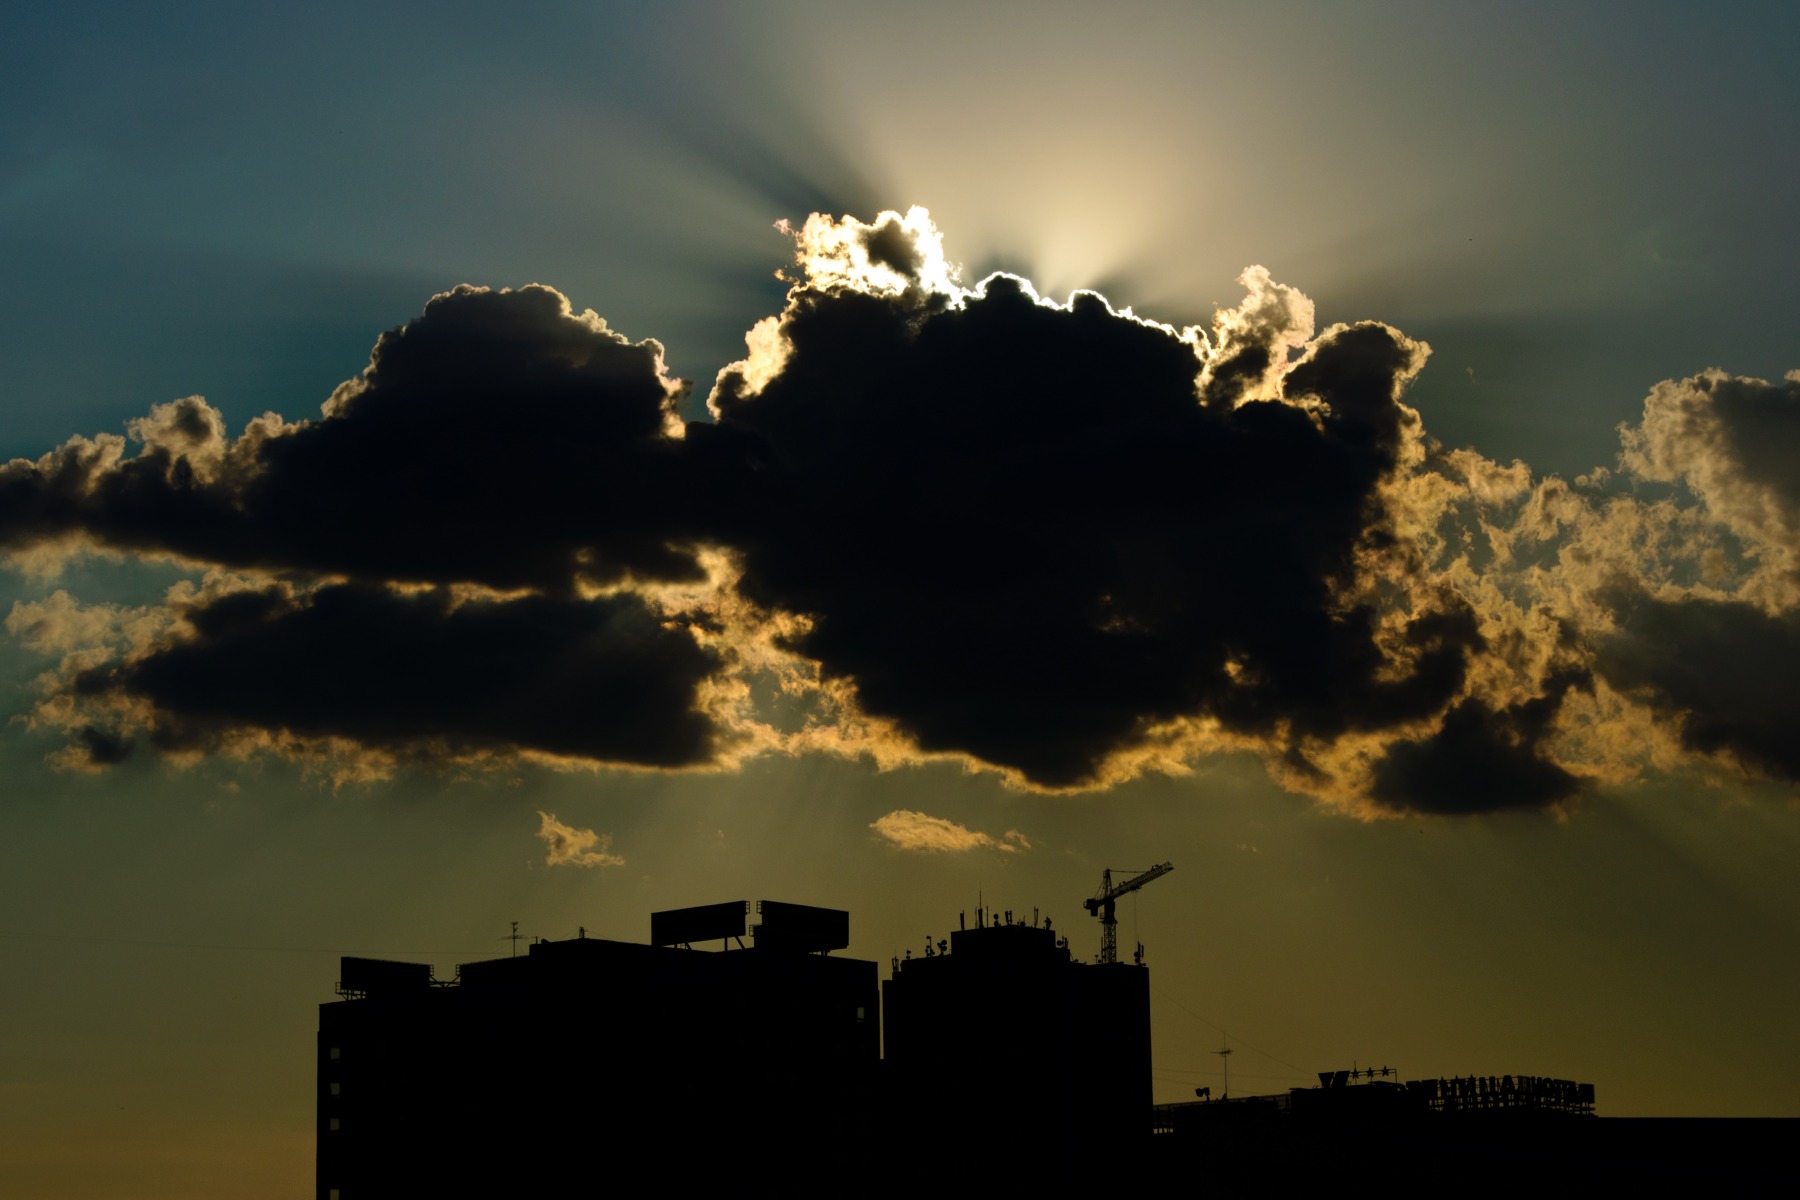 Краденое солнце | Фотограф Александр Кузнецов | foto.by фото.бай